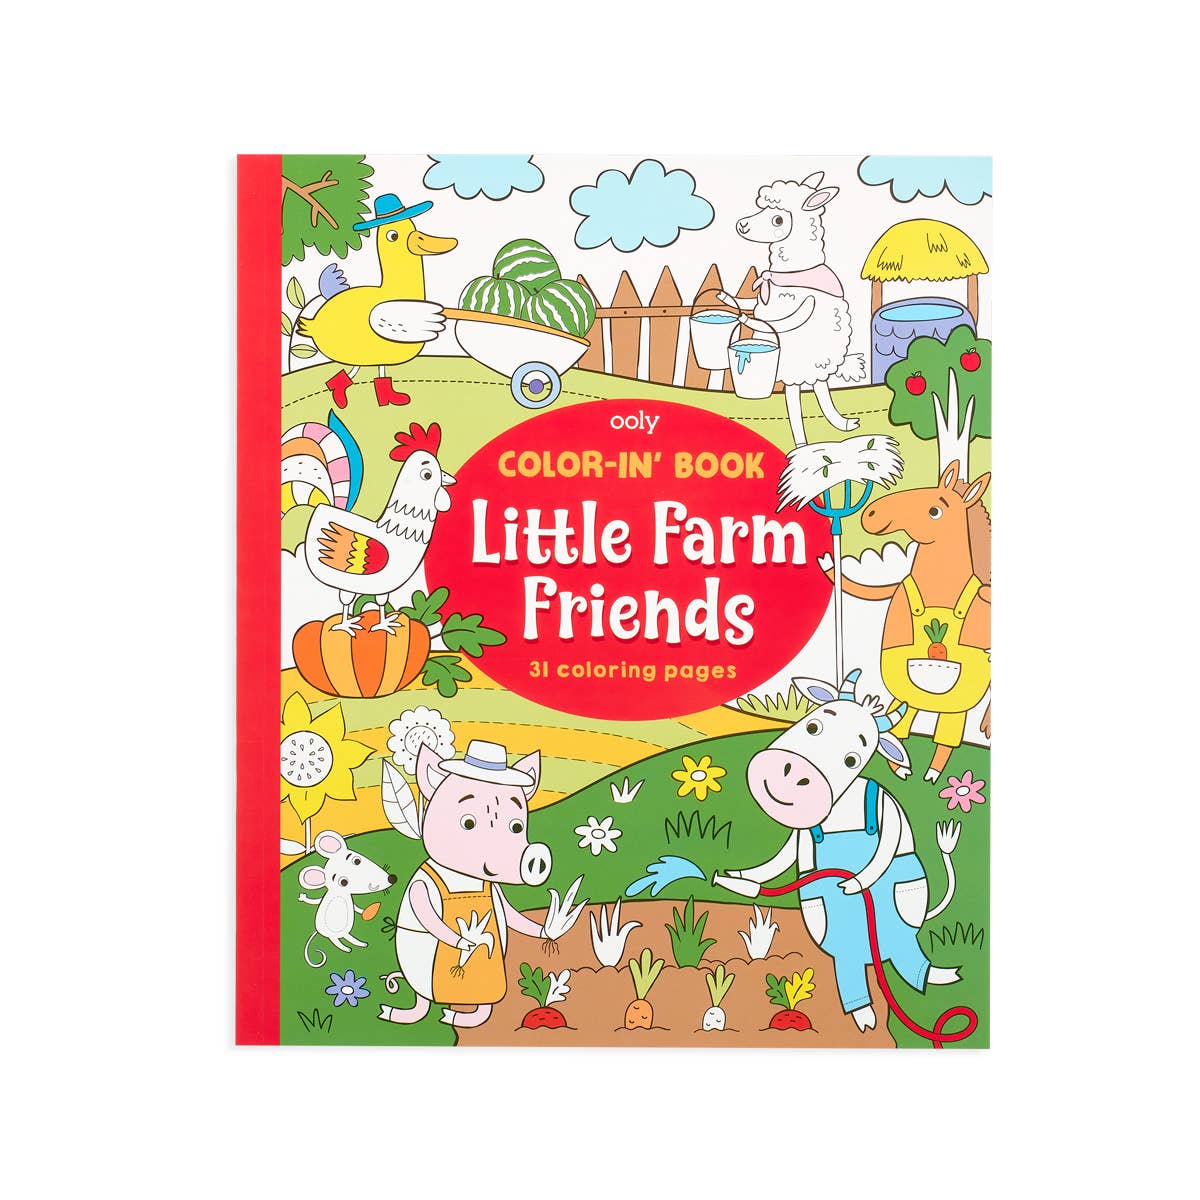 Little Farm Friends Color-in Book